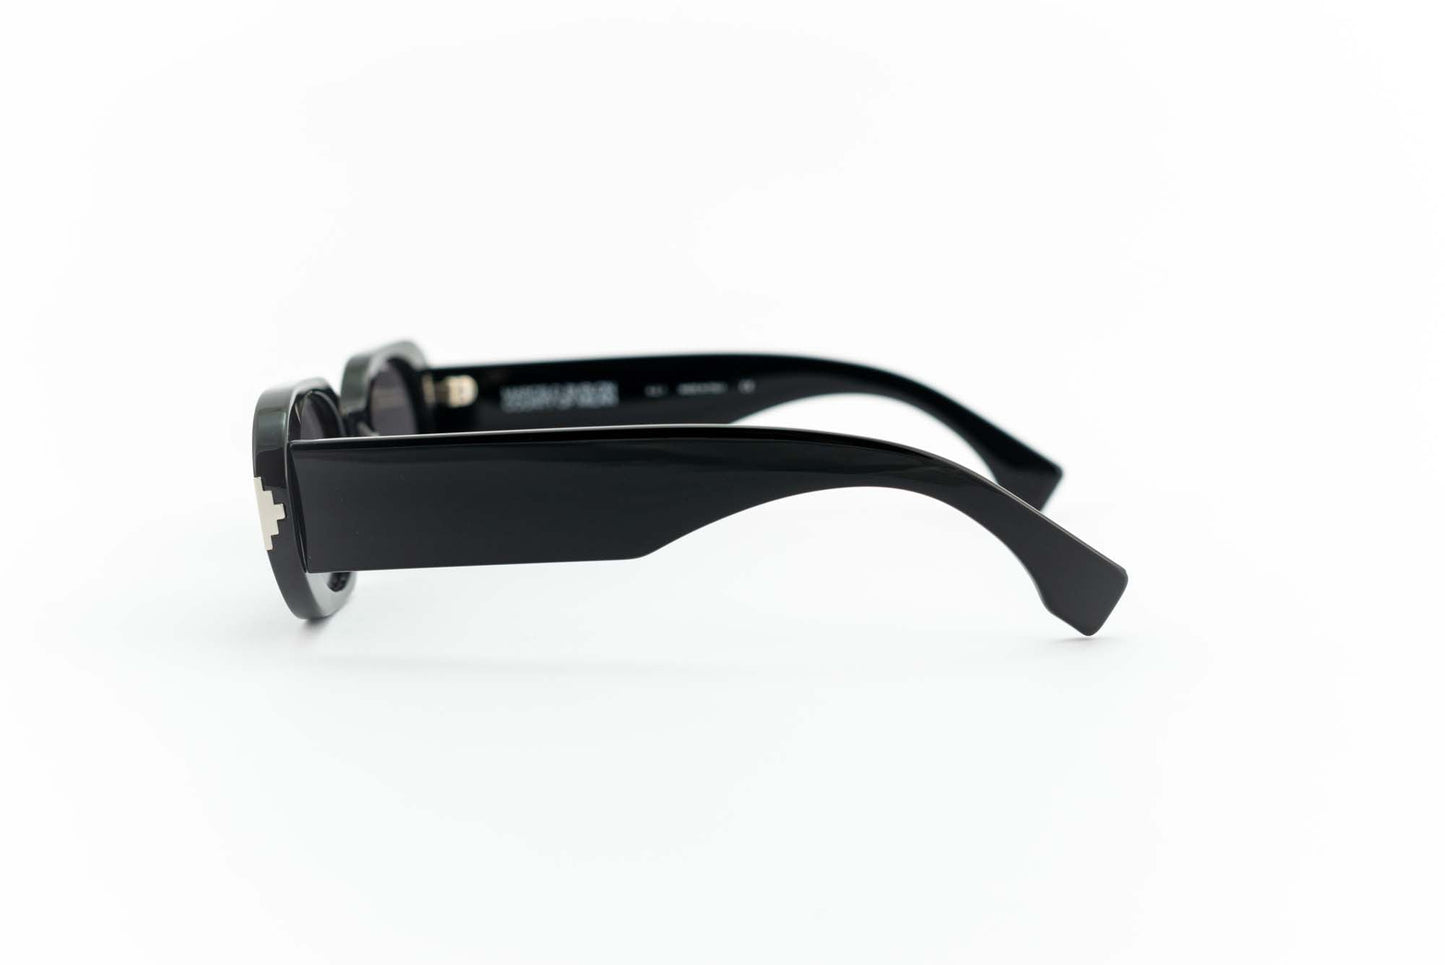 Marcelo Burlon occhiale da sole Nire Black 1007 - Spectaclo.com - eyewear store - Occhiali da sole -